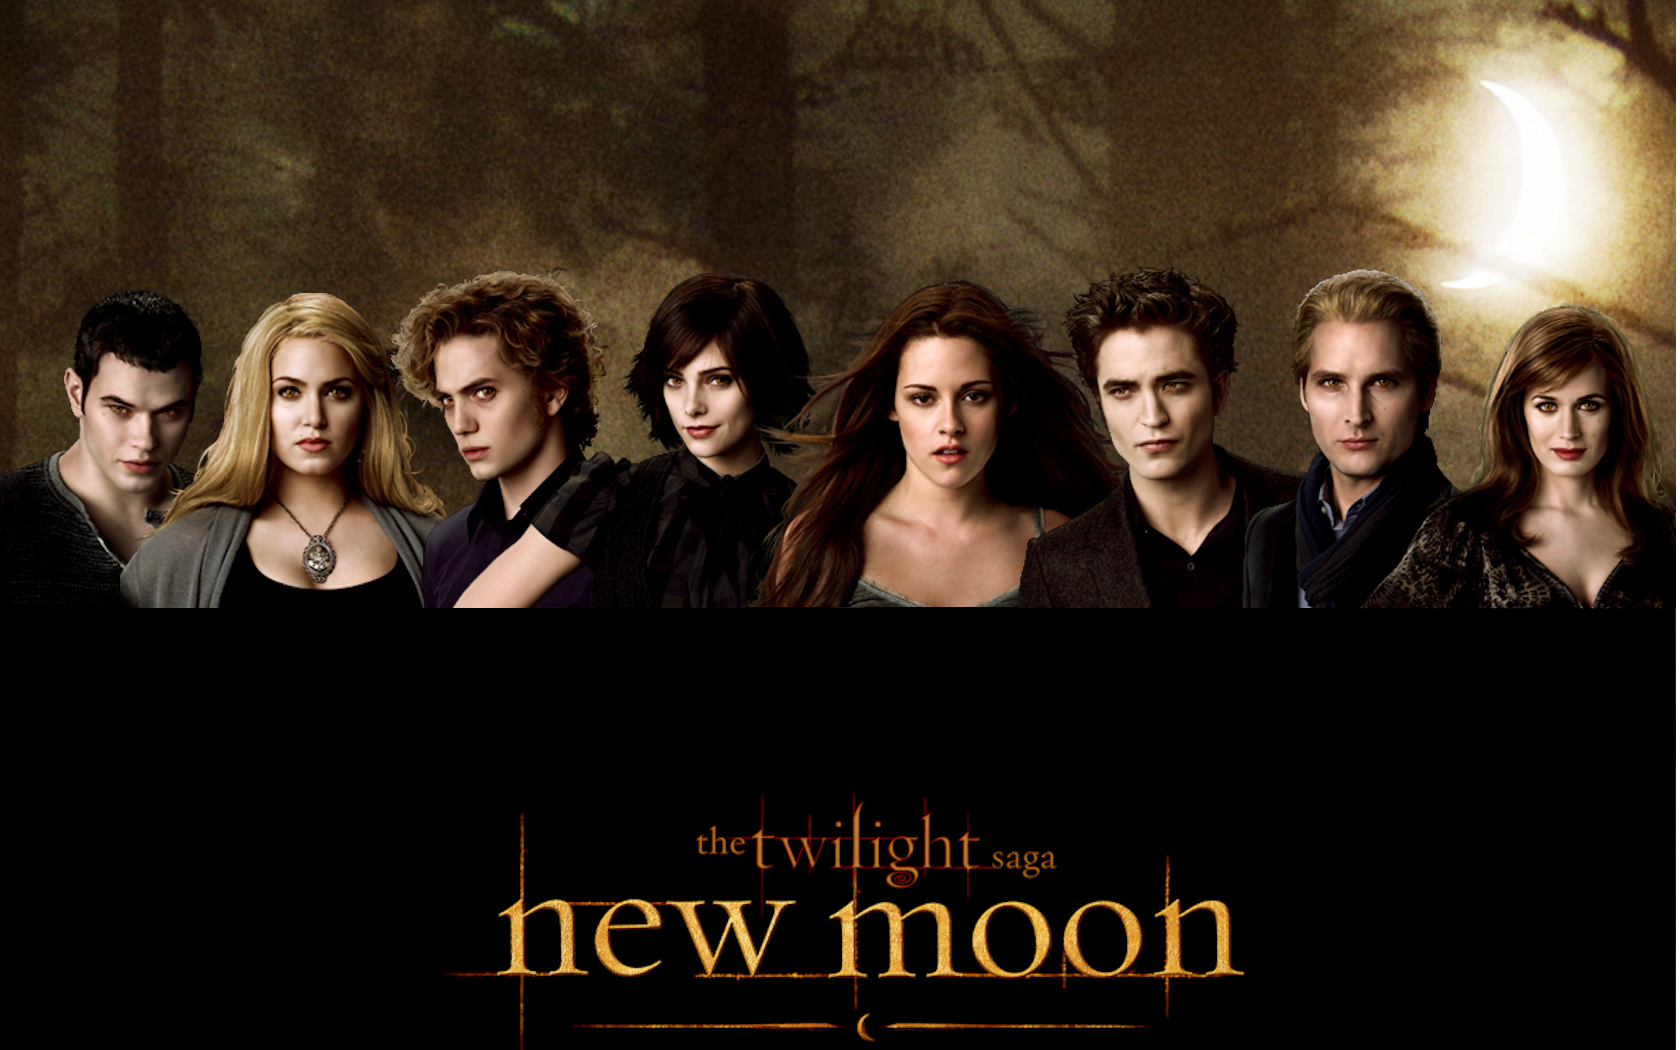 the twilight saga new moon full movie in hindi download